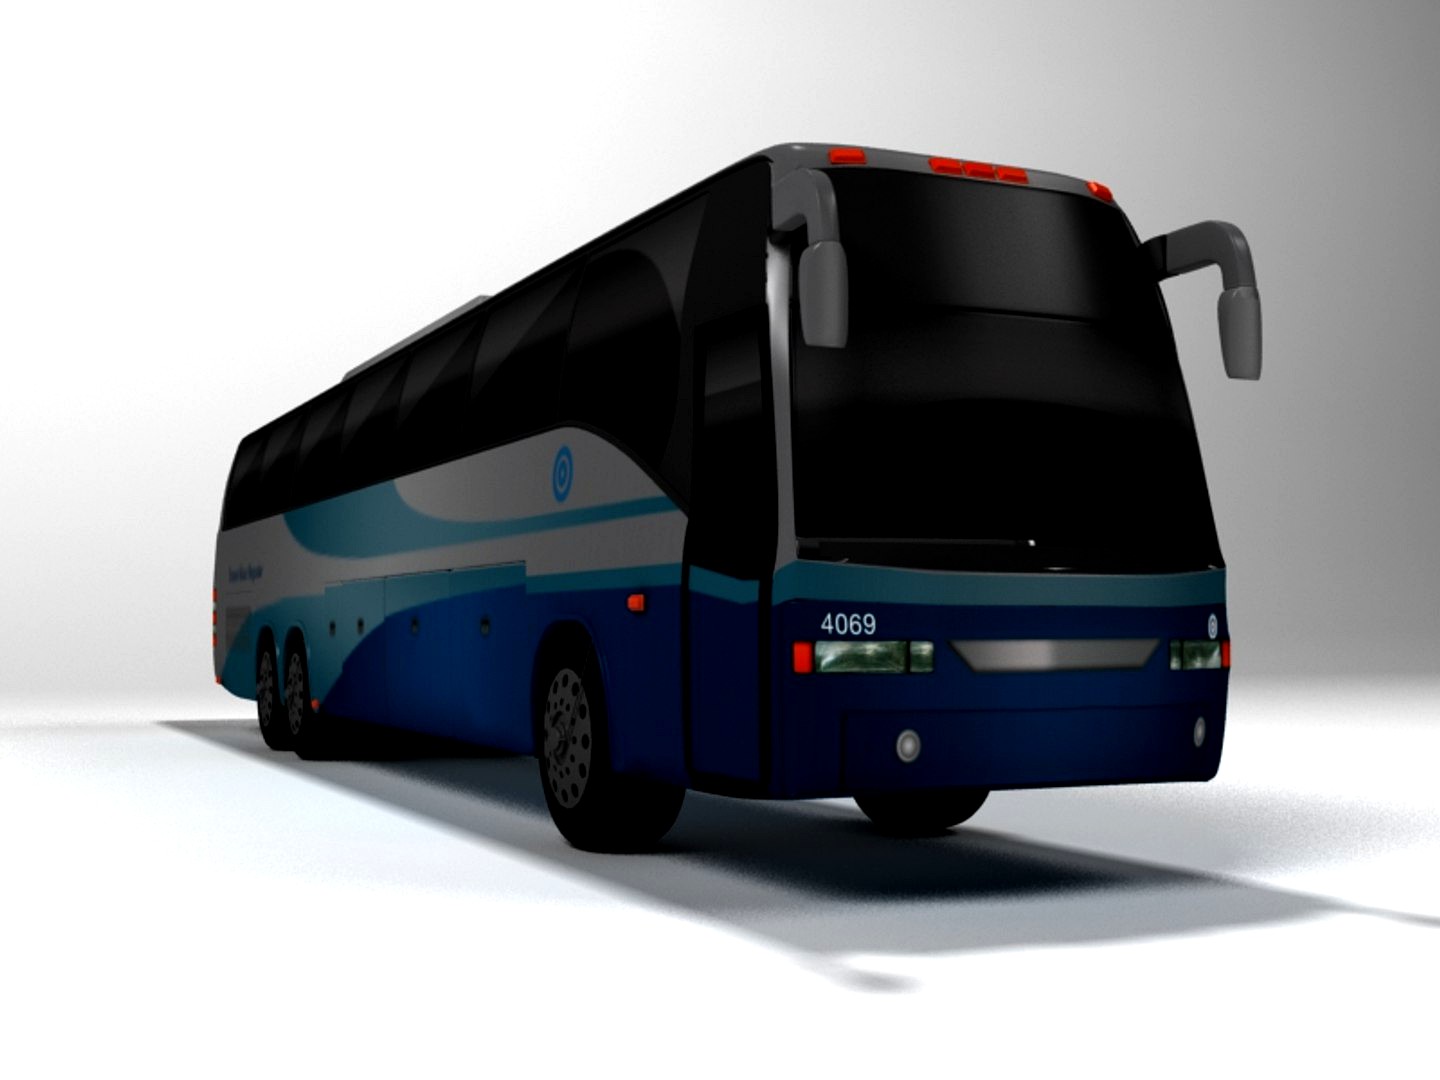 Travel bus regular